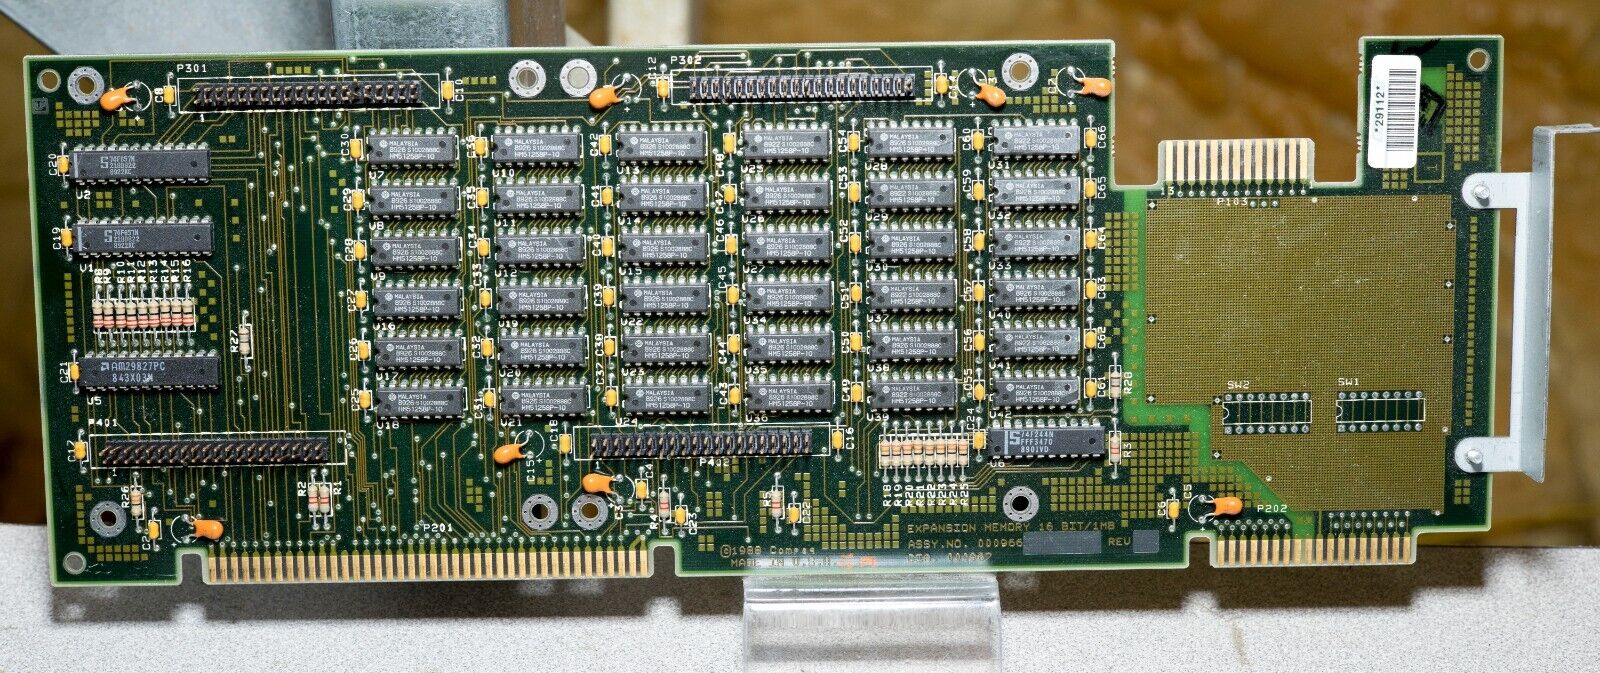 Vintage Compaq DeskPro Expansion memory 16 bit 1MB ISA534